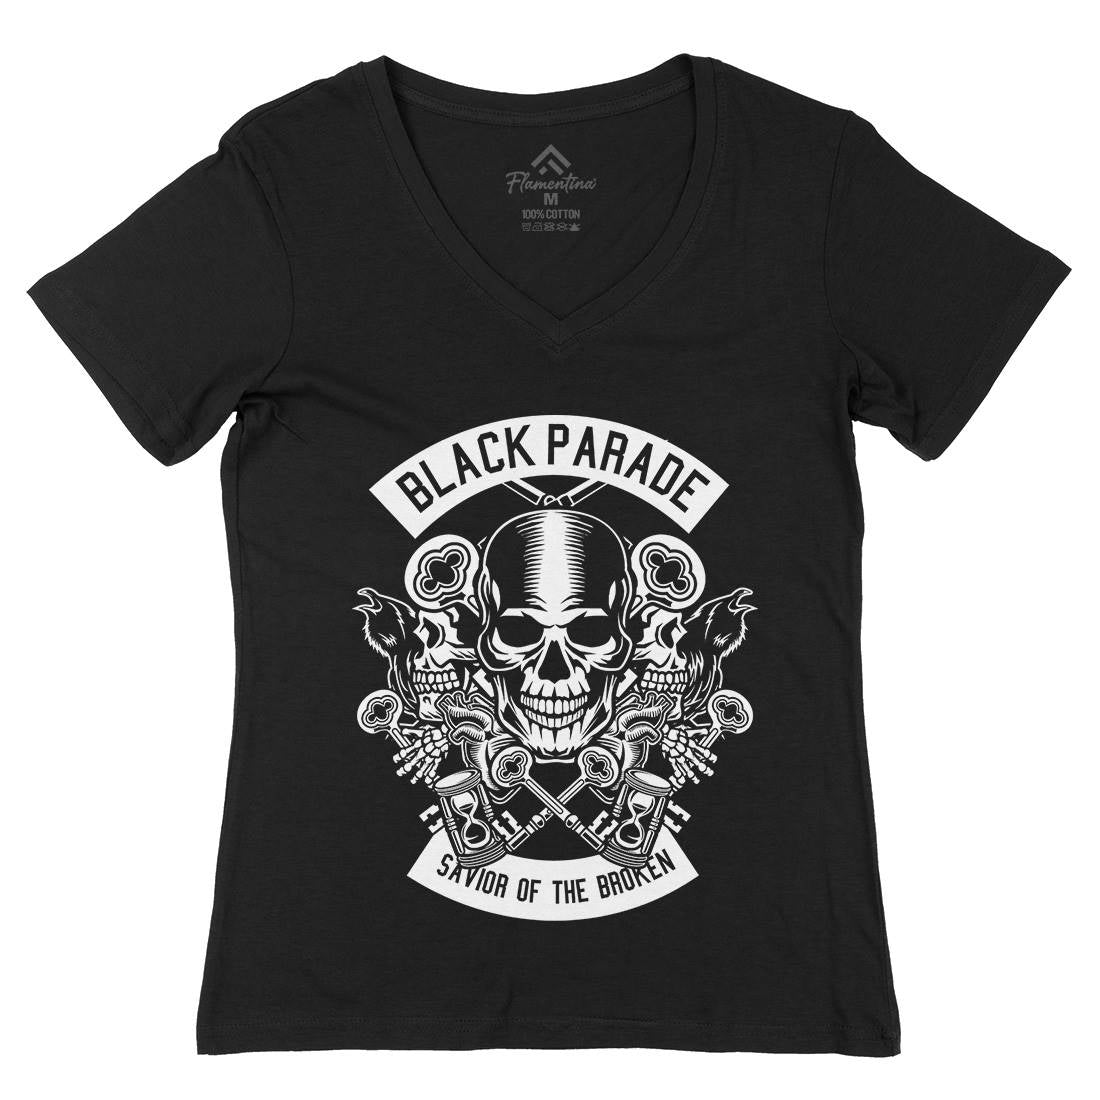 Black Parade Womens Organic V-Neck T-Shirt Horror B501